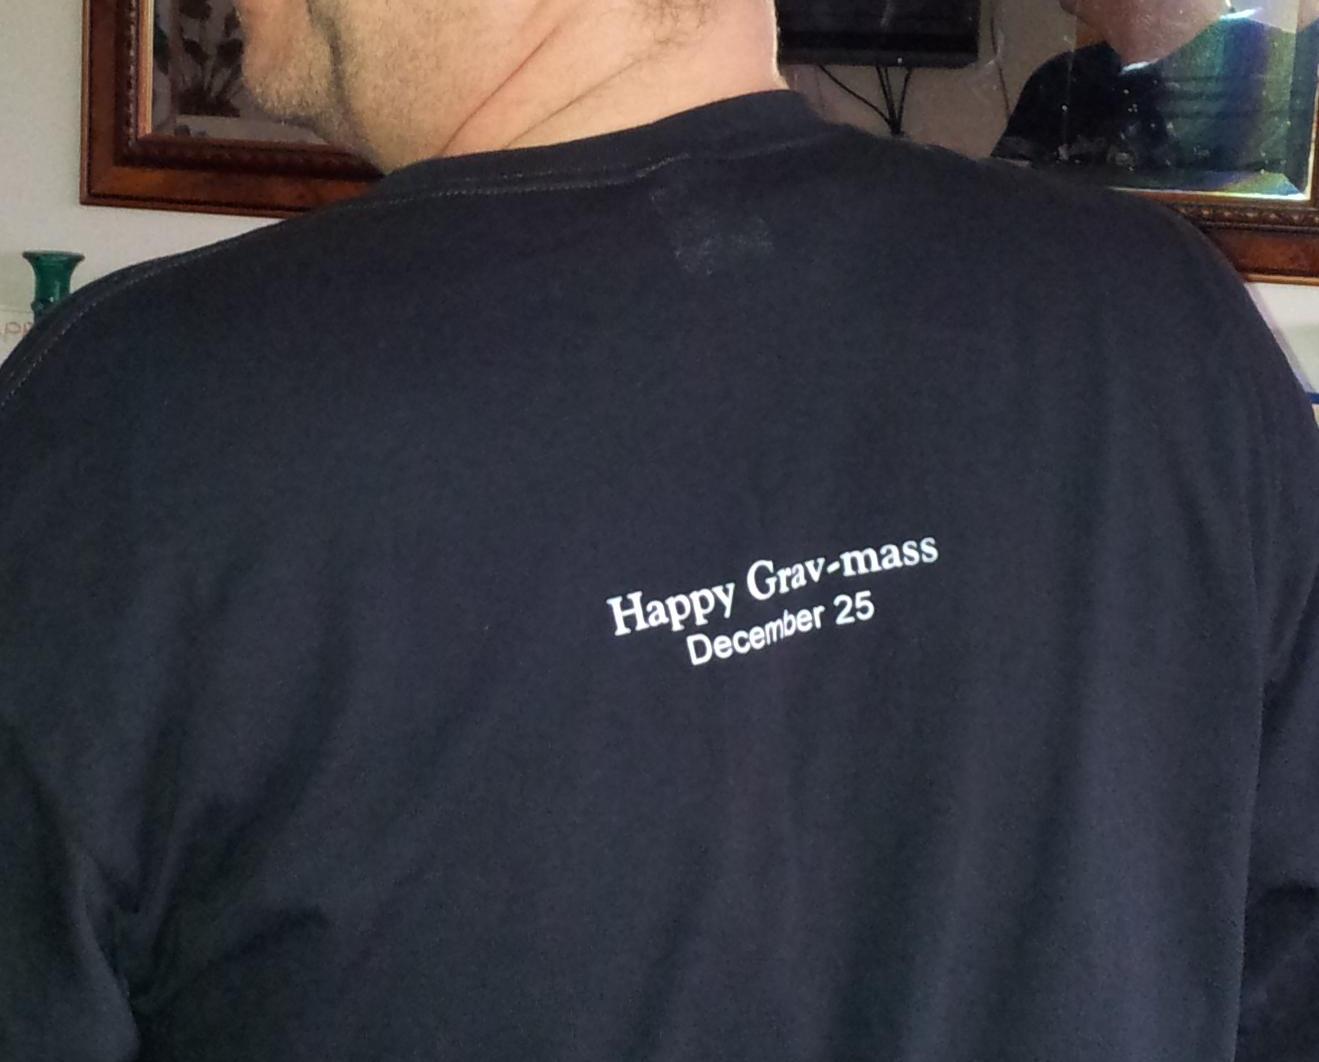 Simon's Grav-mass shirt